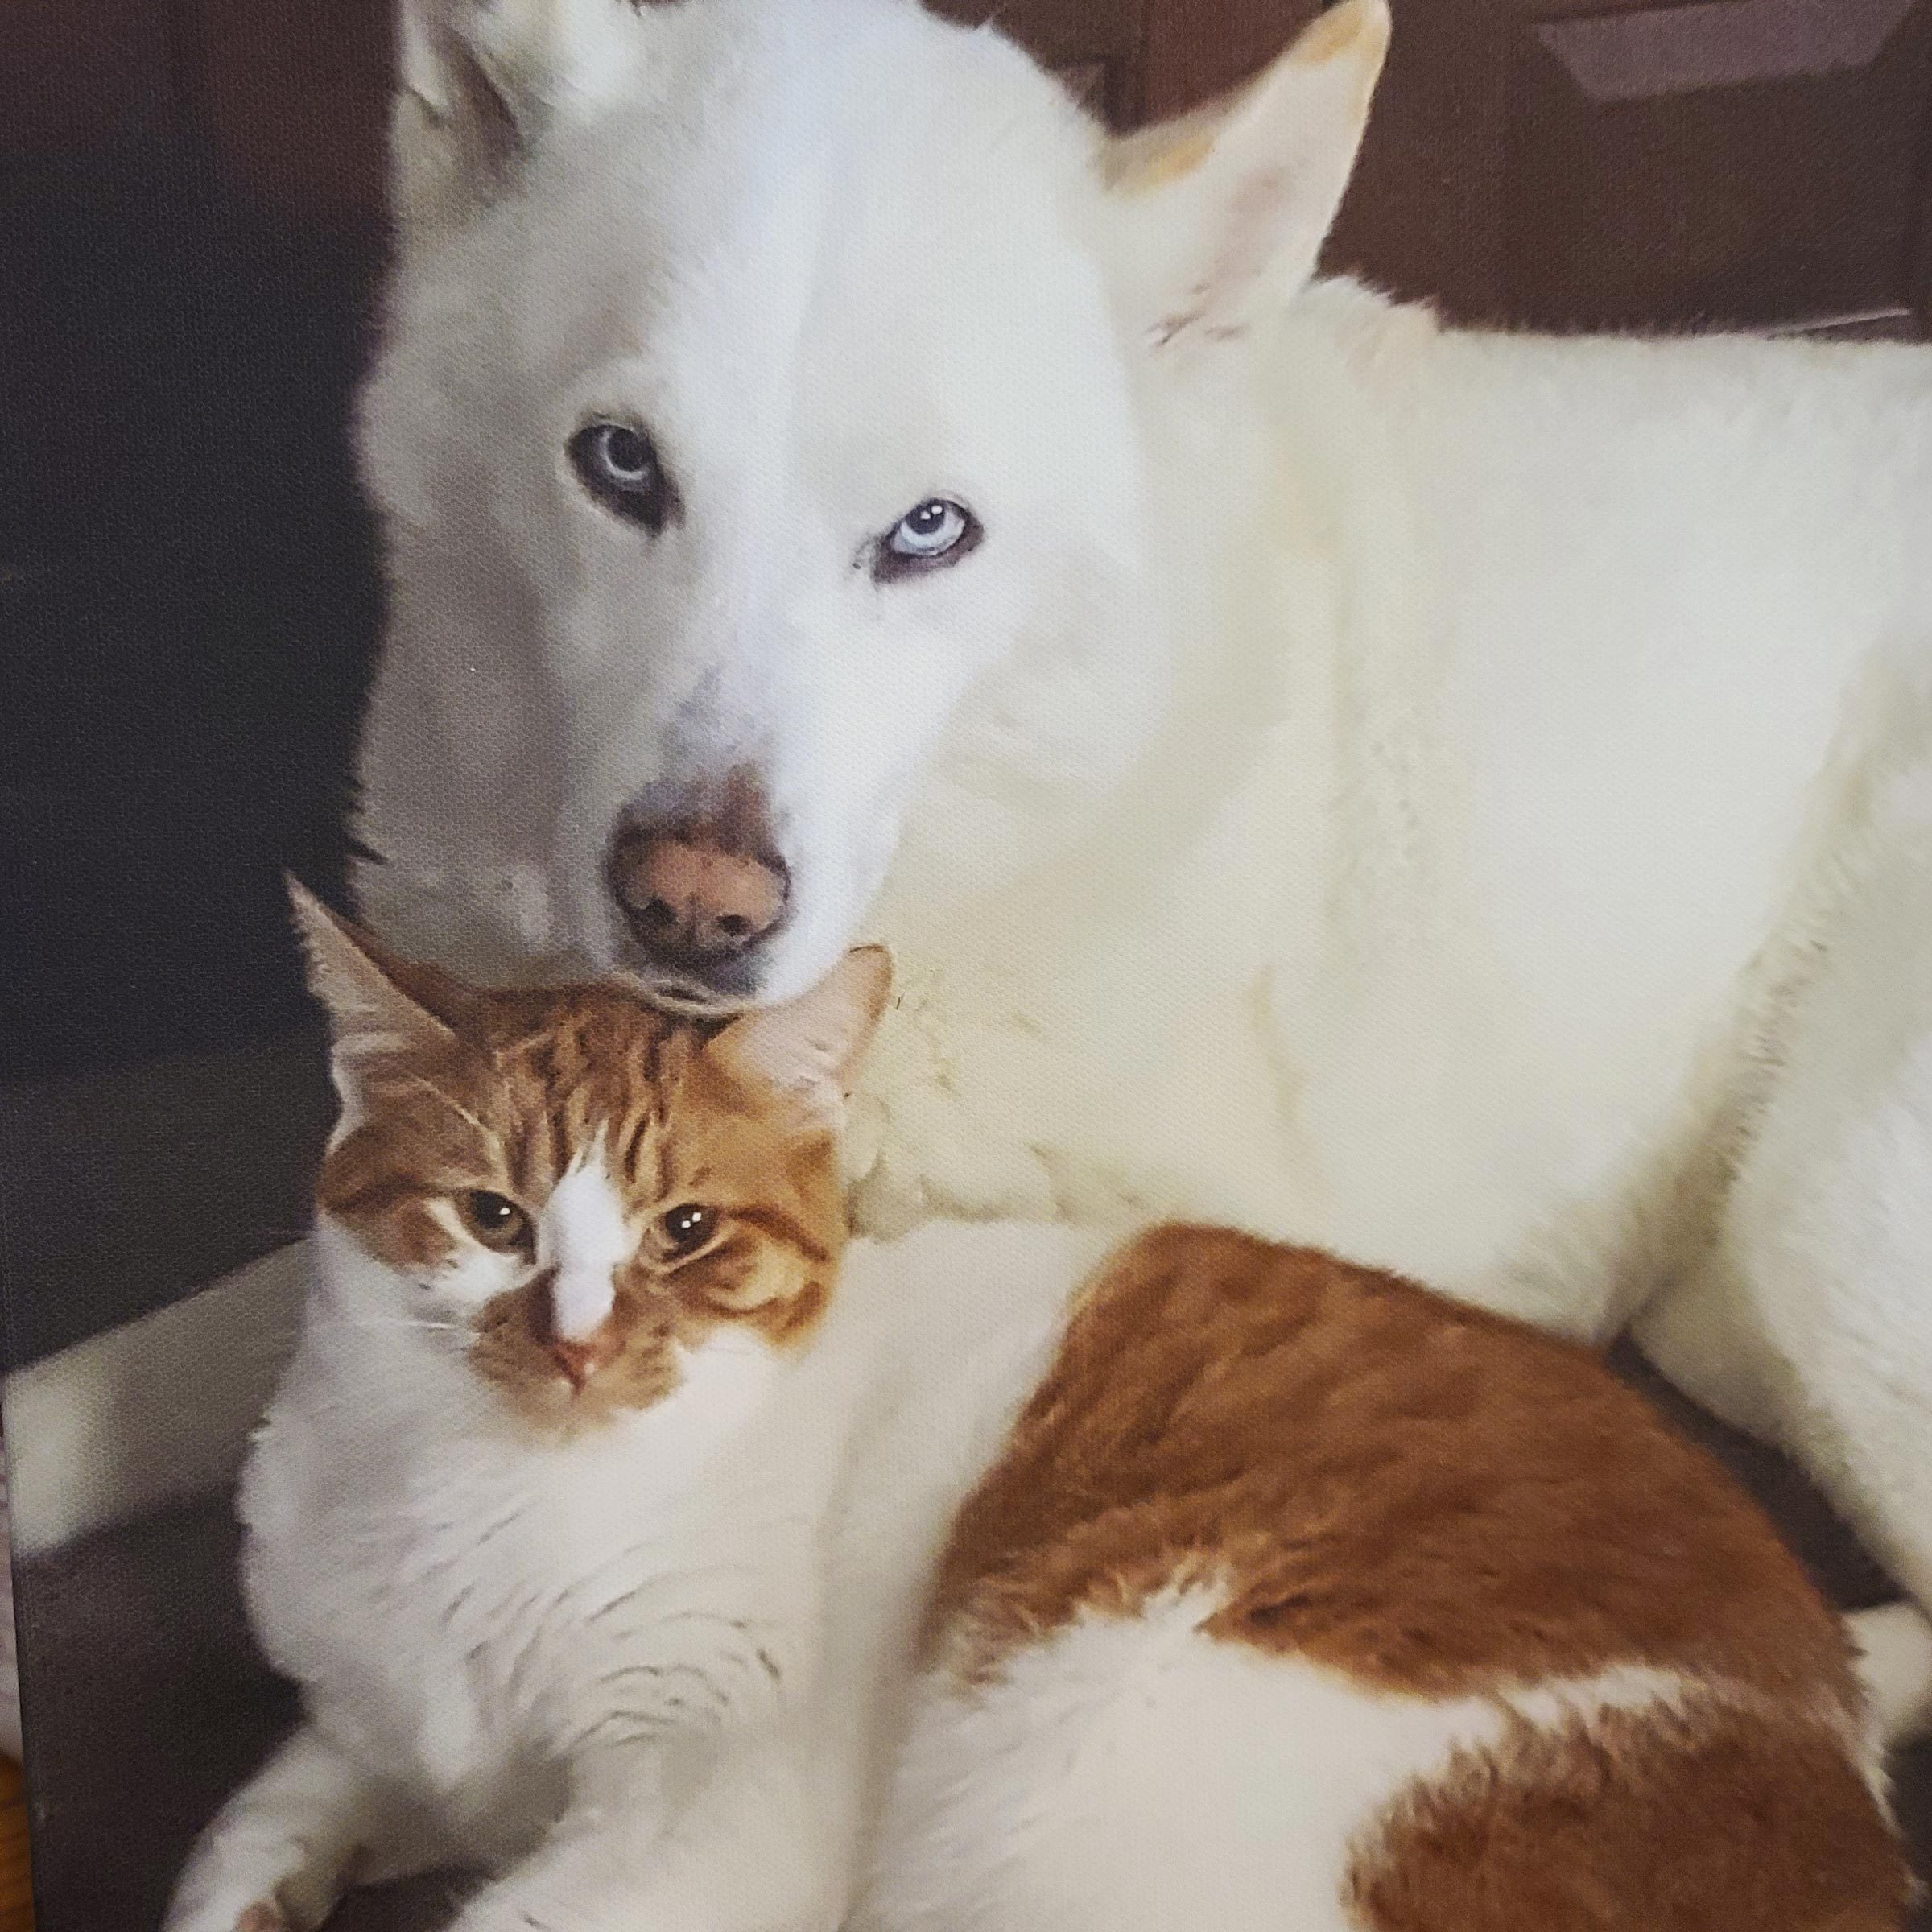 large white dog sitting closely with orange and white cat